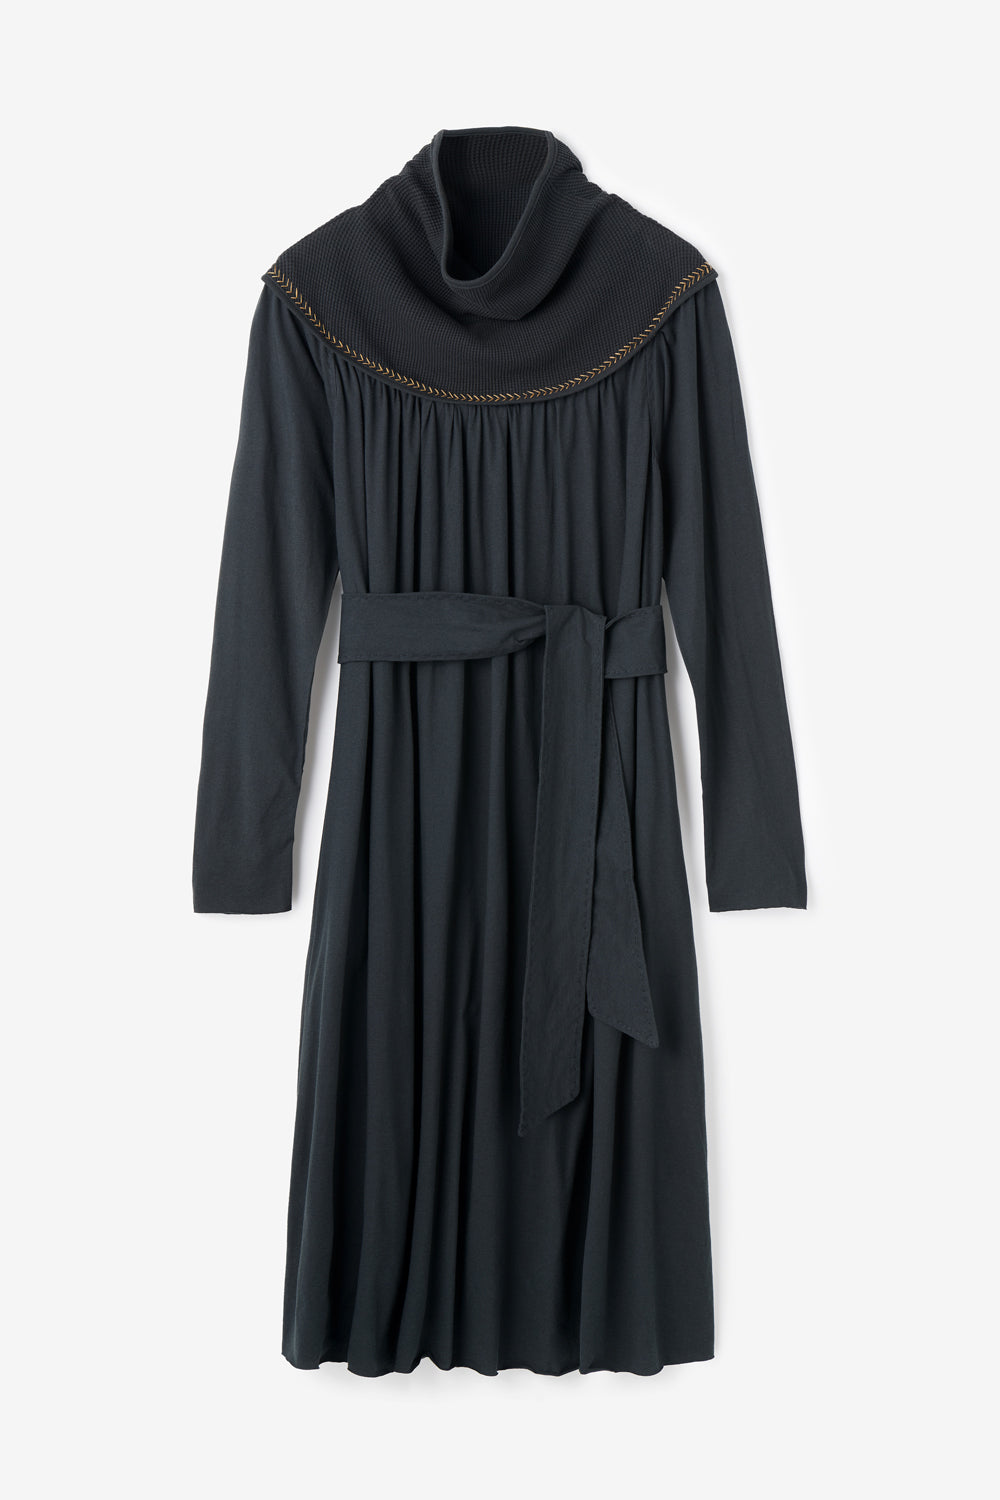 Alabama Chanin Waffle Yoke Mira Dress in Black with Arrowhead stitch and long sleeves in 100% Organic Cotton